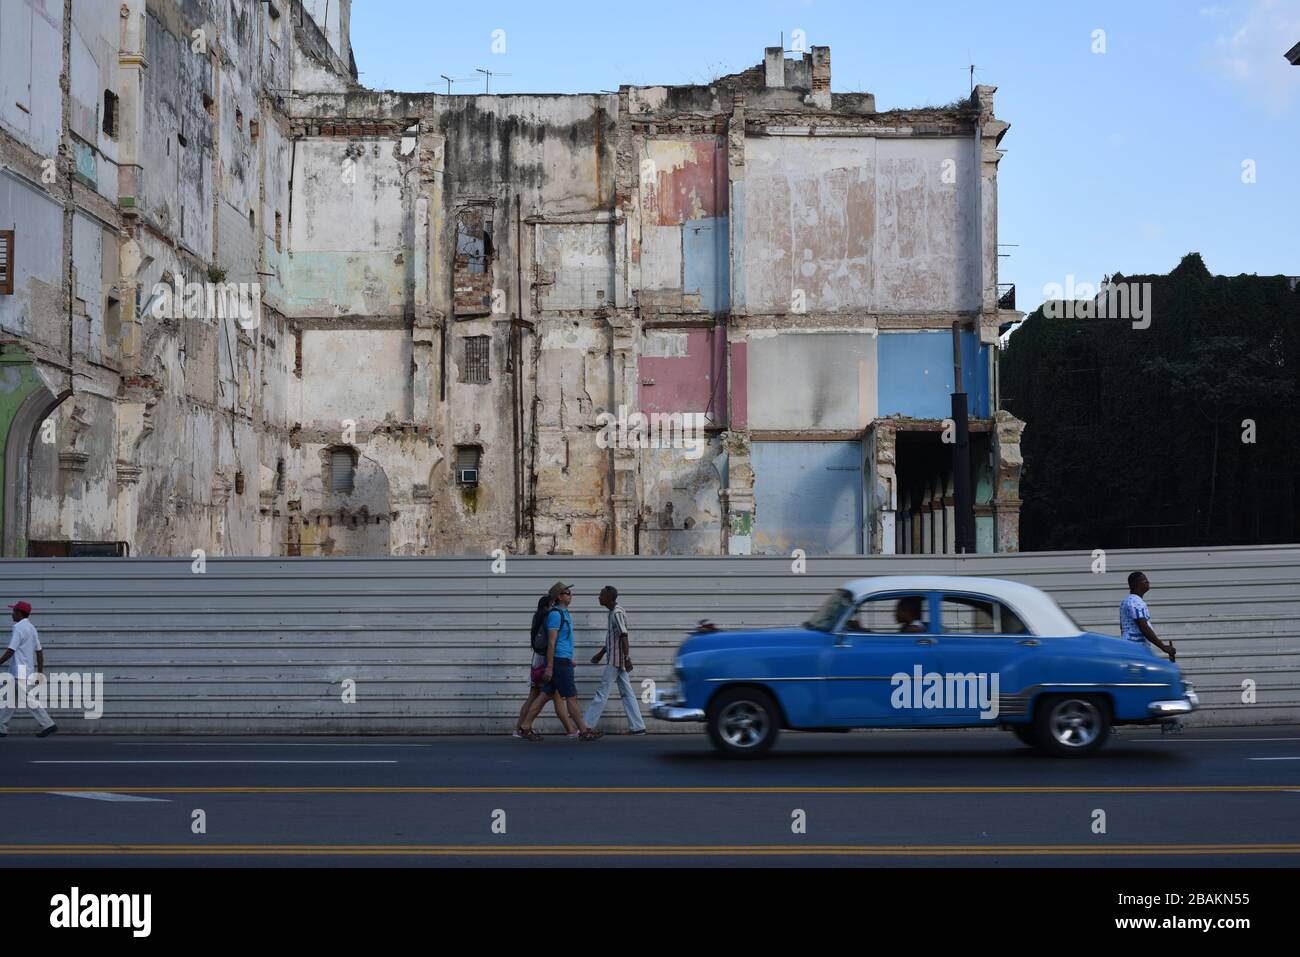 People, car, demolished building, street, 2014, Cuba Stock Photo